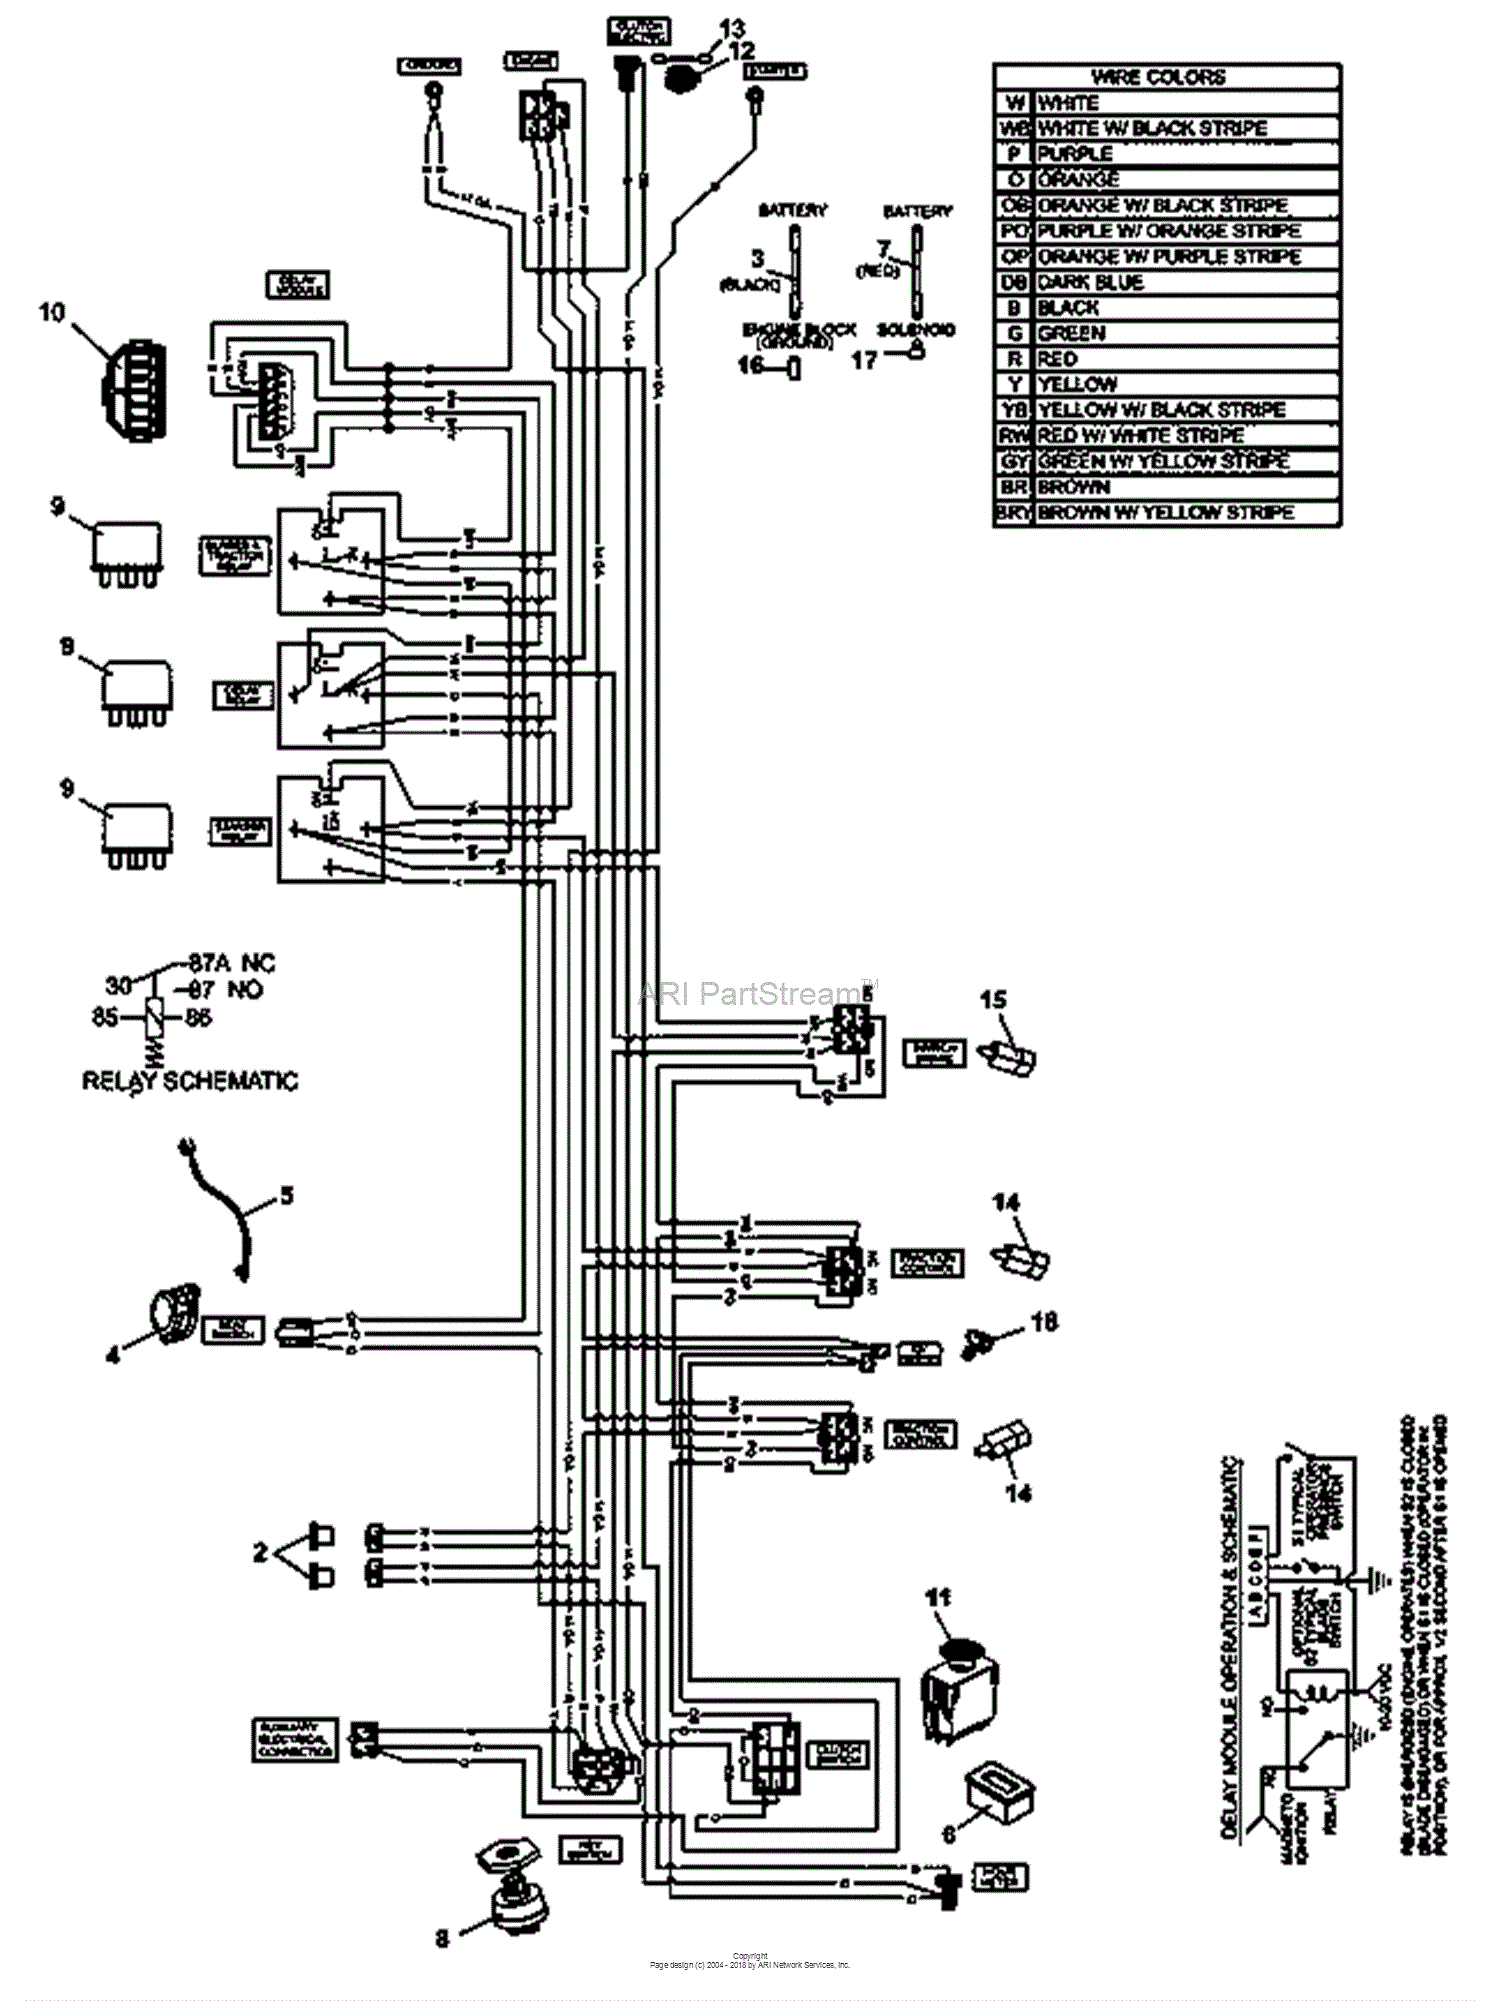 Mower Switch Wiring Diagram